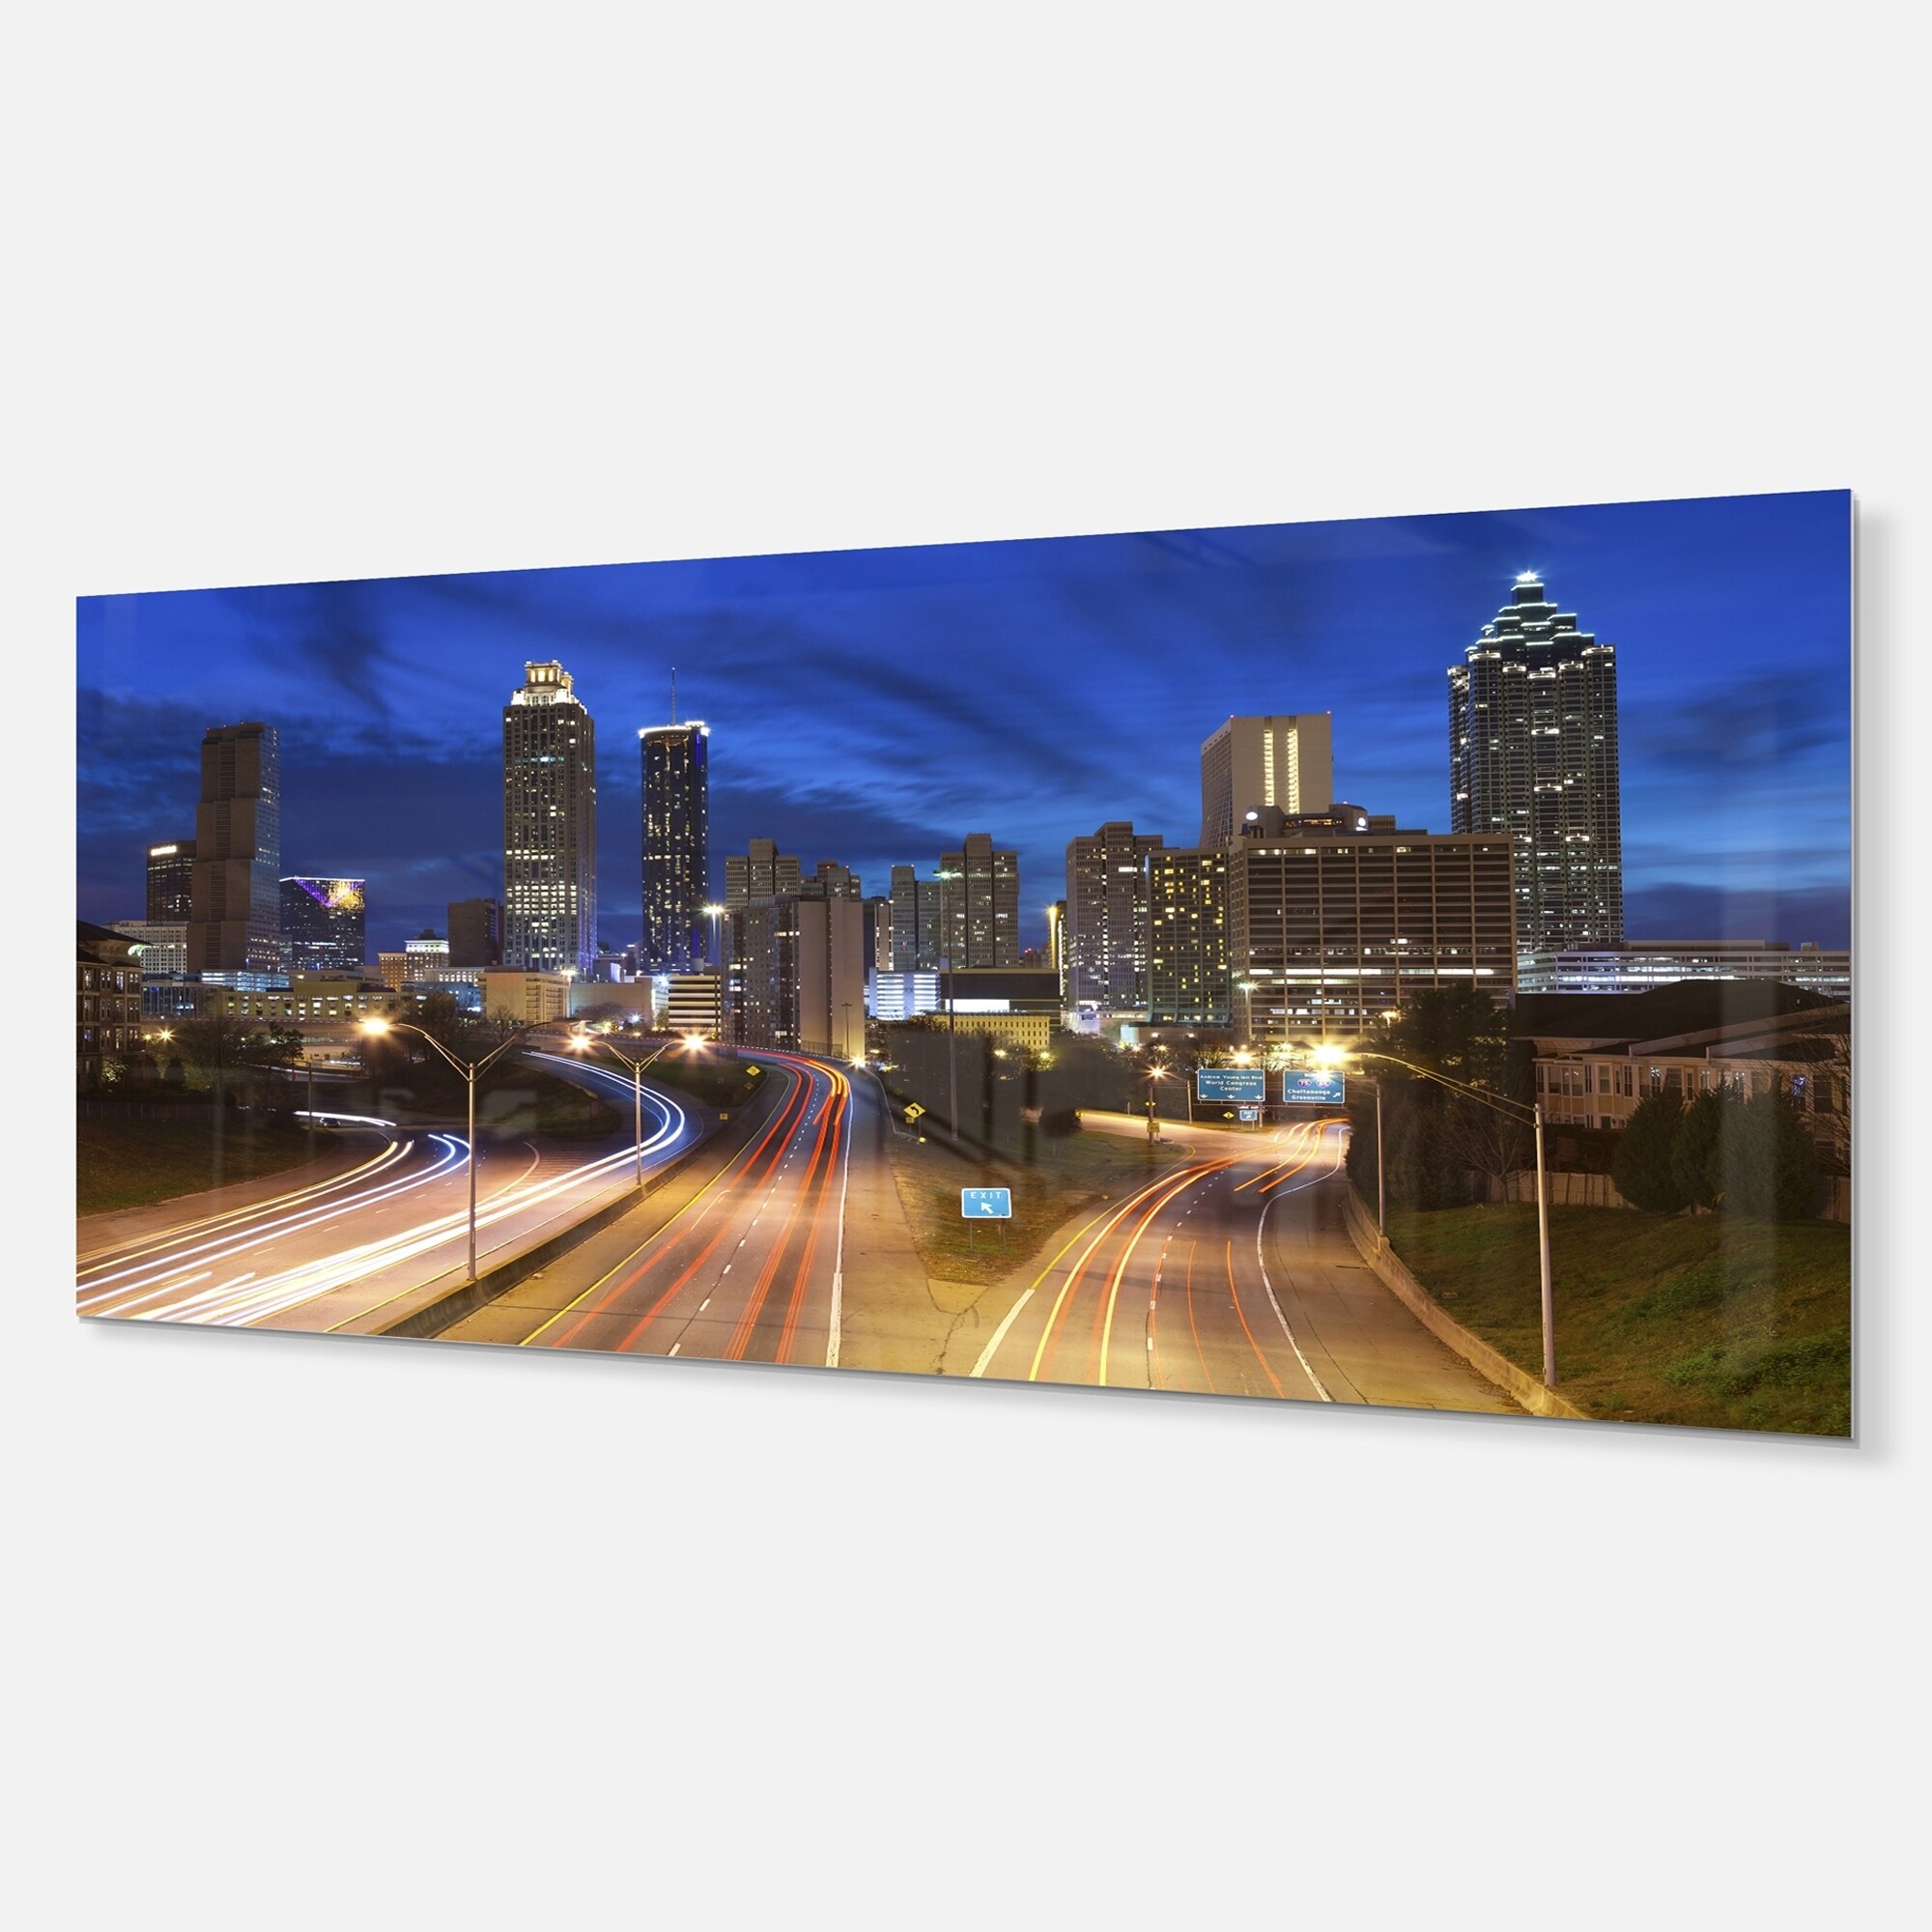 Shop Atlanta Skyline Twilight Blue Hour Cityscape Glossy Metal Wall Art Overstock 12749742